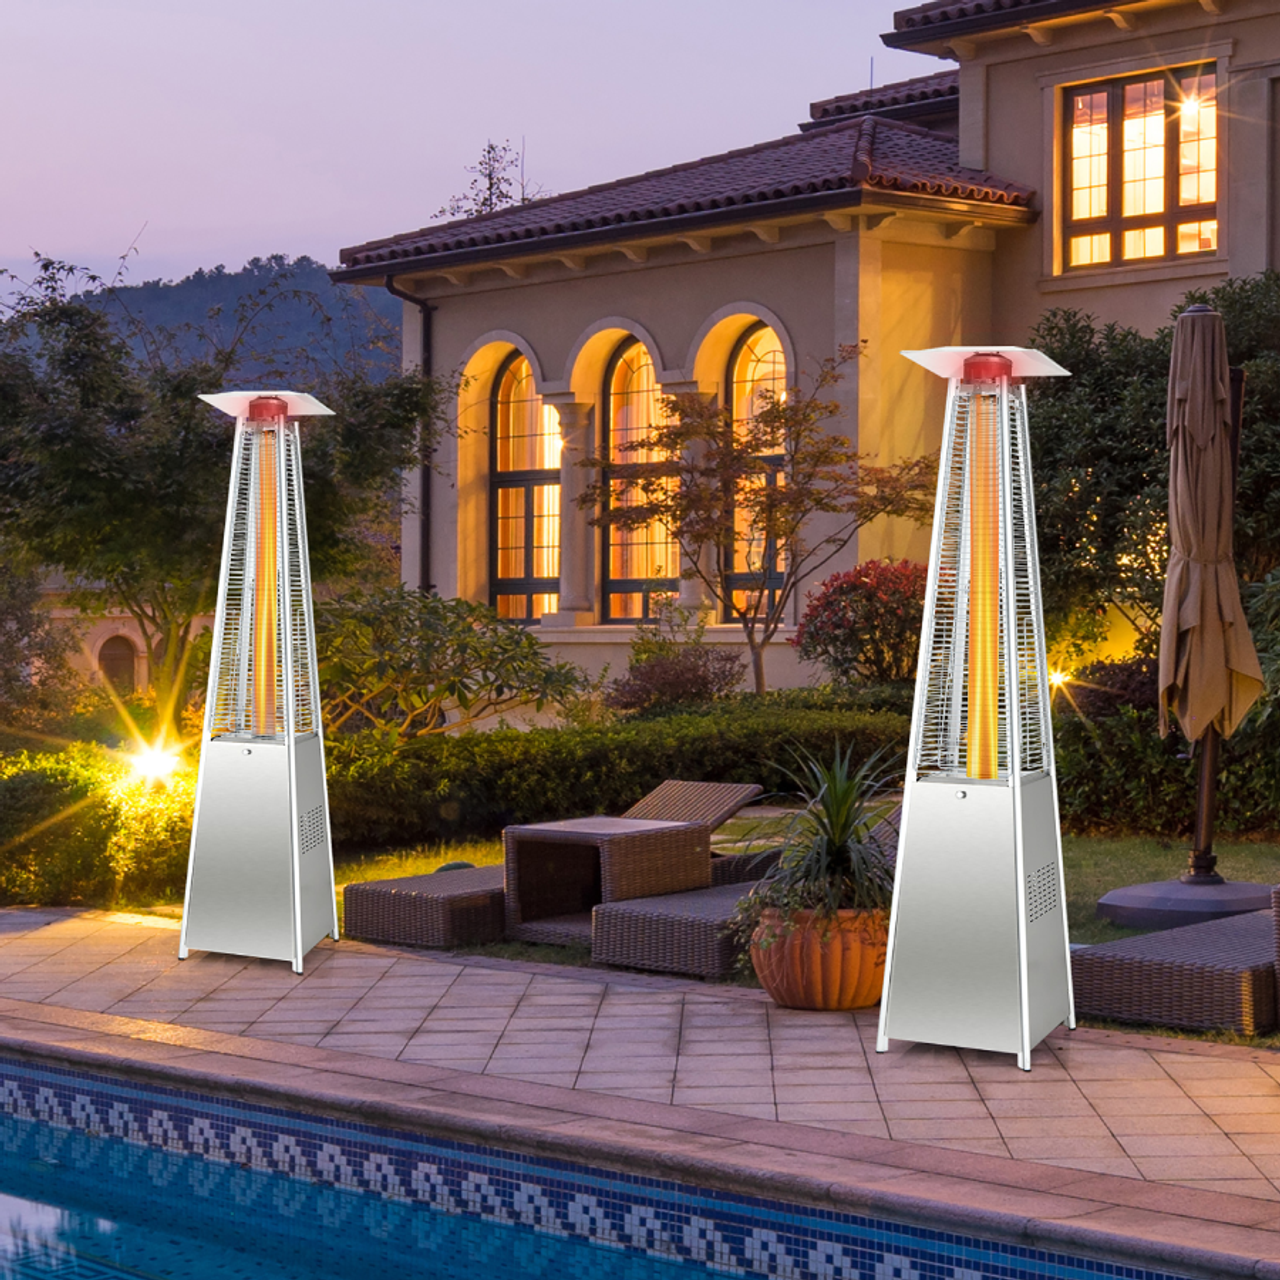 90-Inch Glass Tube 42,000BTU Pyramid Patio Heater product image